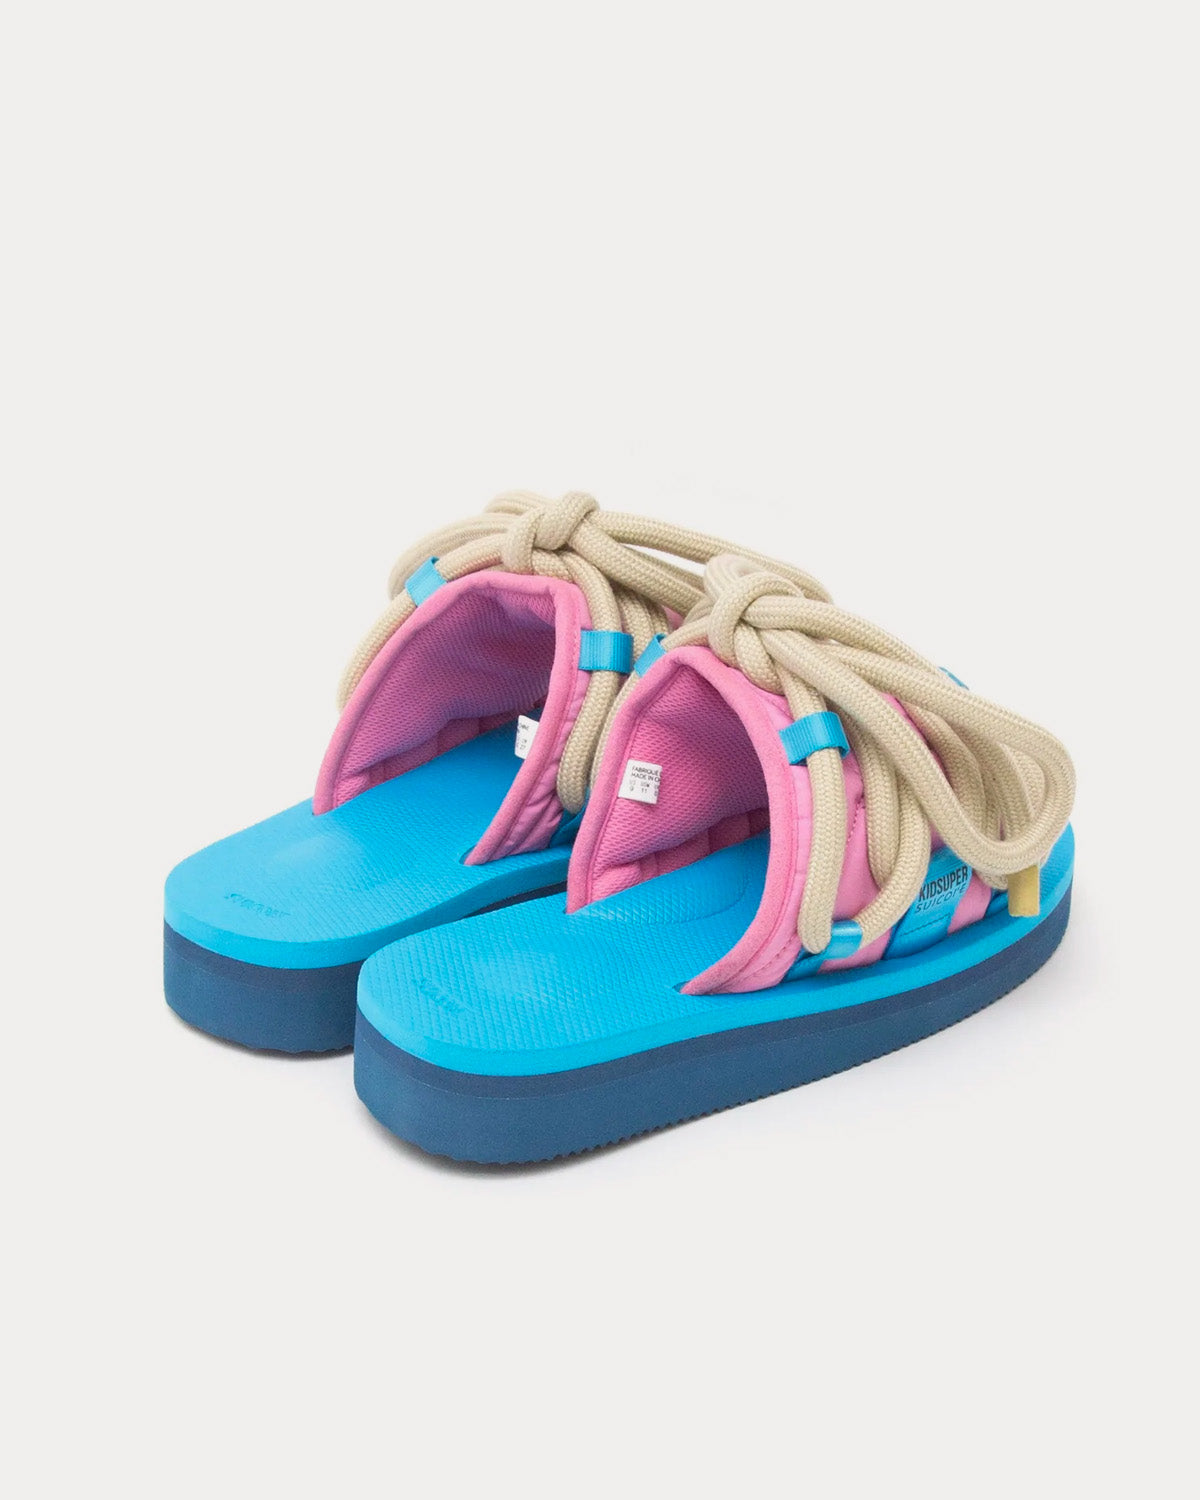 Suicoke x KidSuper - Moto Blue / Pink Sandals